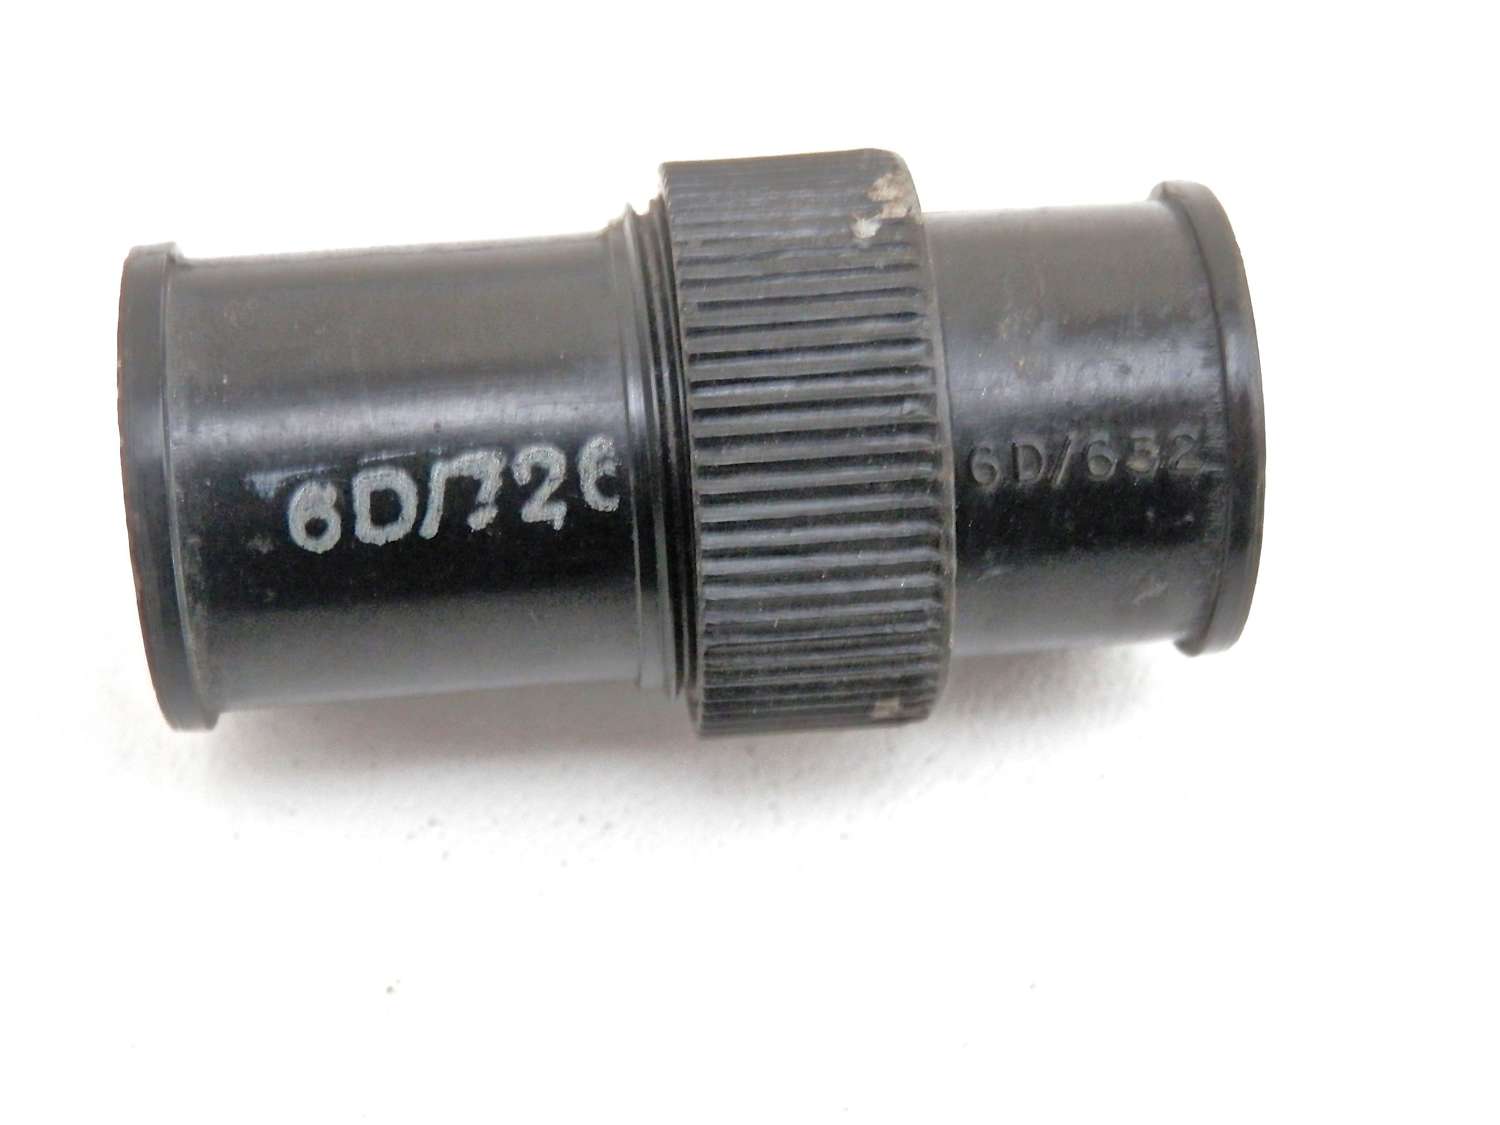 RAF g type oxygen mask hose connectors